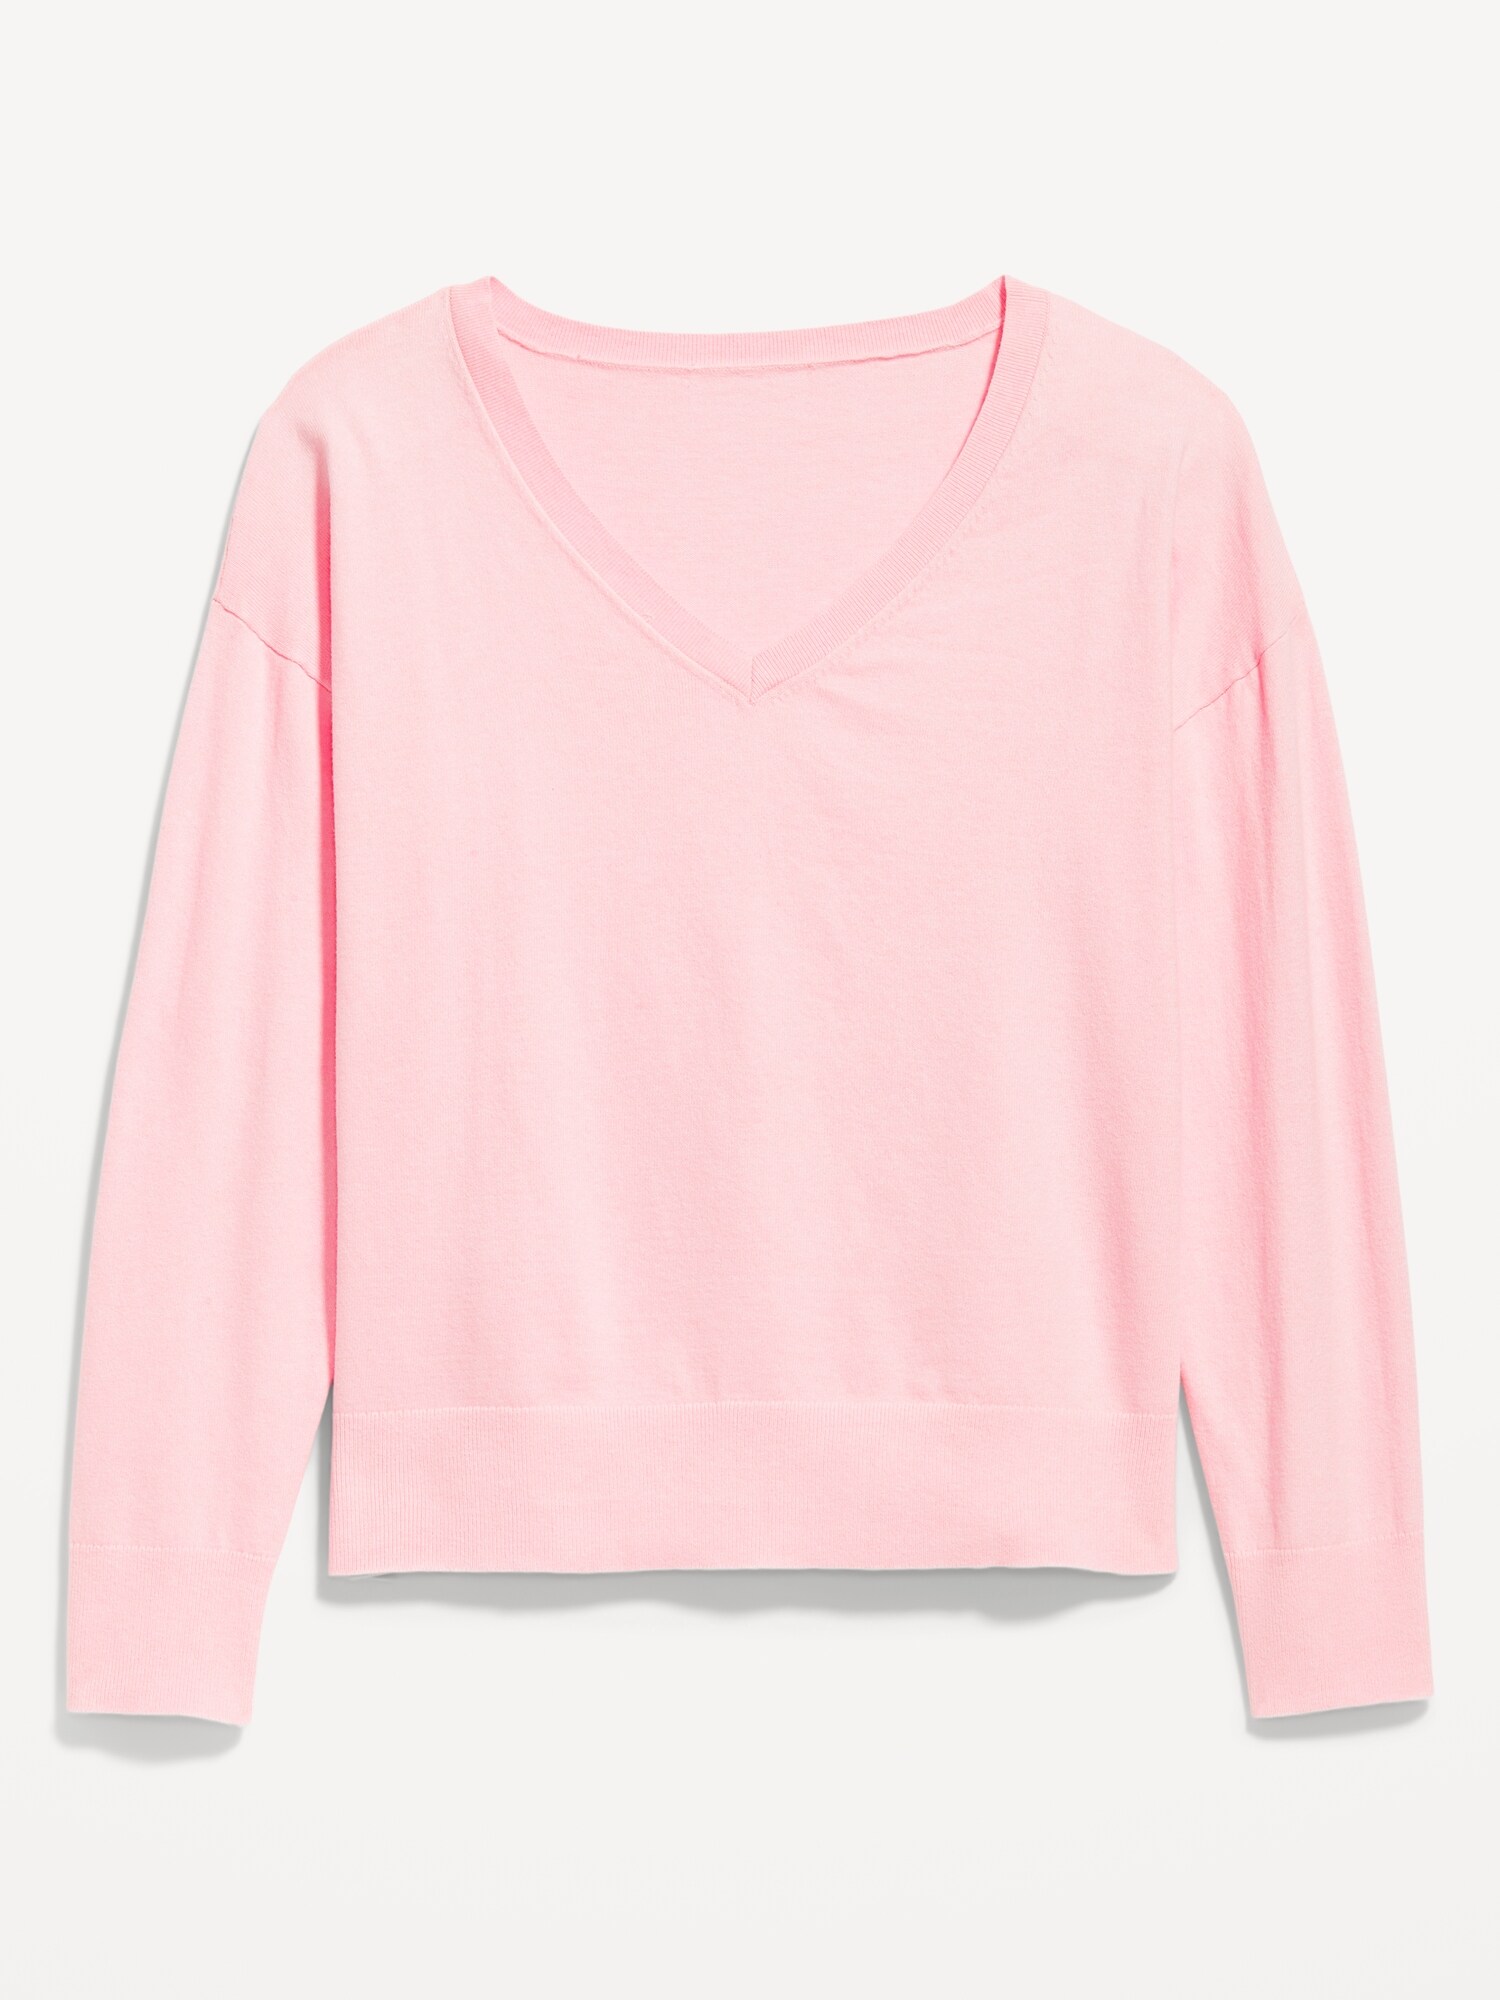 Lucky Brand size M pink cotton blend chunky long sleeve v neck sweater